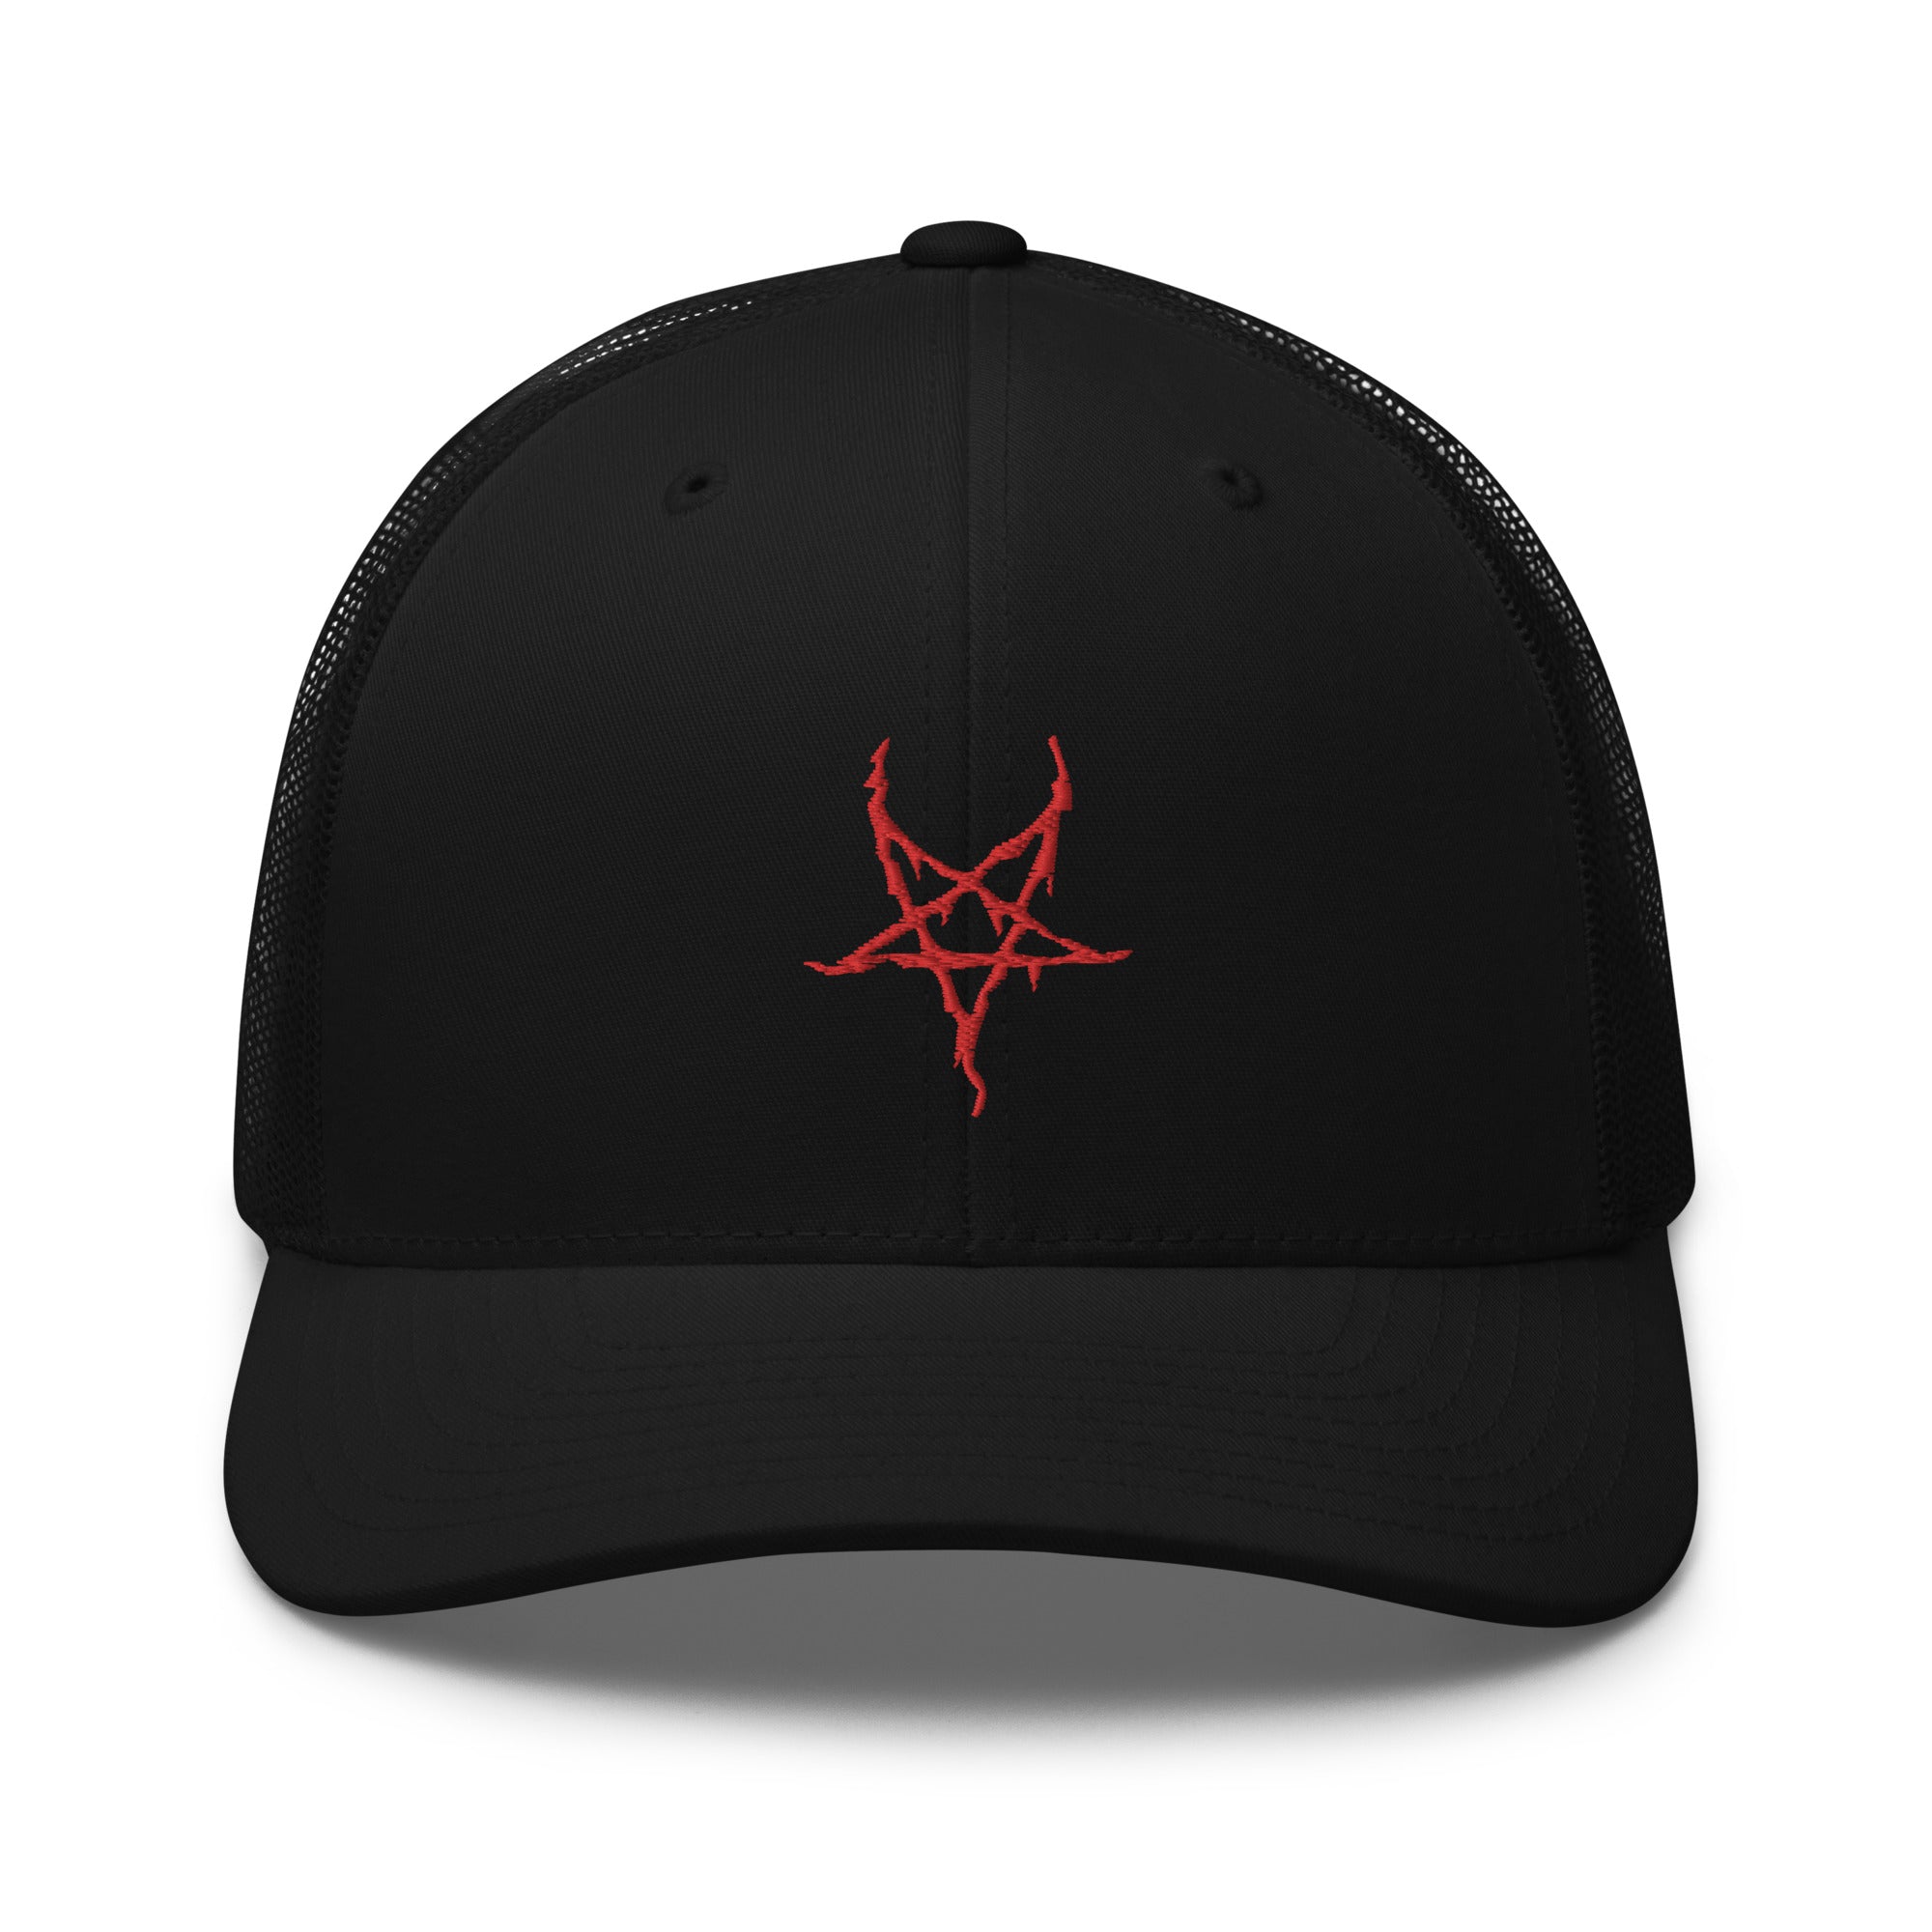 Red Inverted Pentagram Black Metal Style Embroidered Trucker Cap Snapback Hat